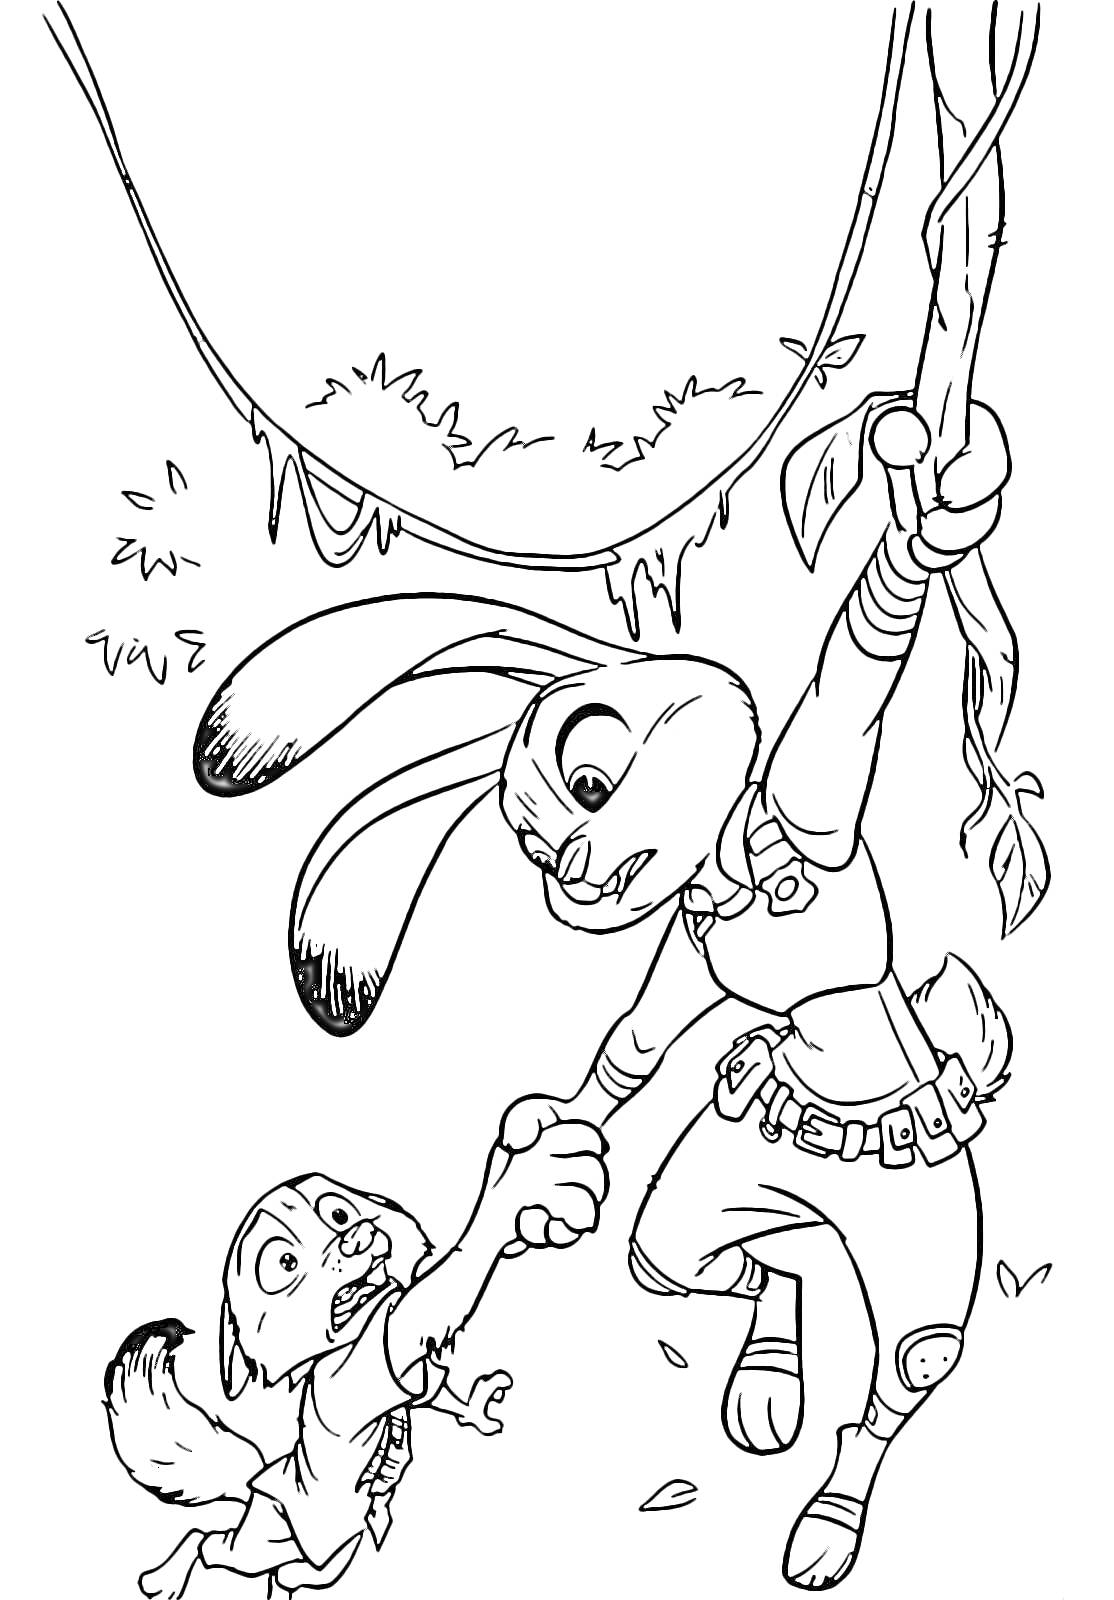 Джуди Хоппс спасает кролика, вися на лиане